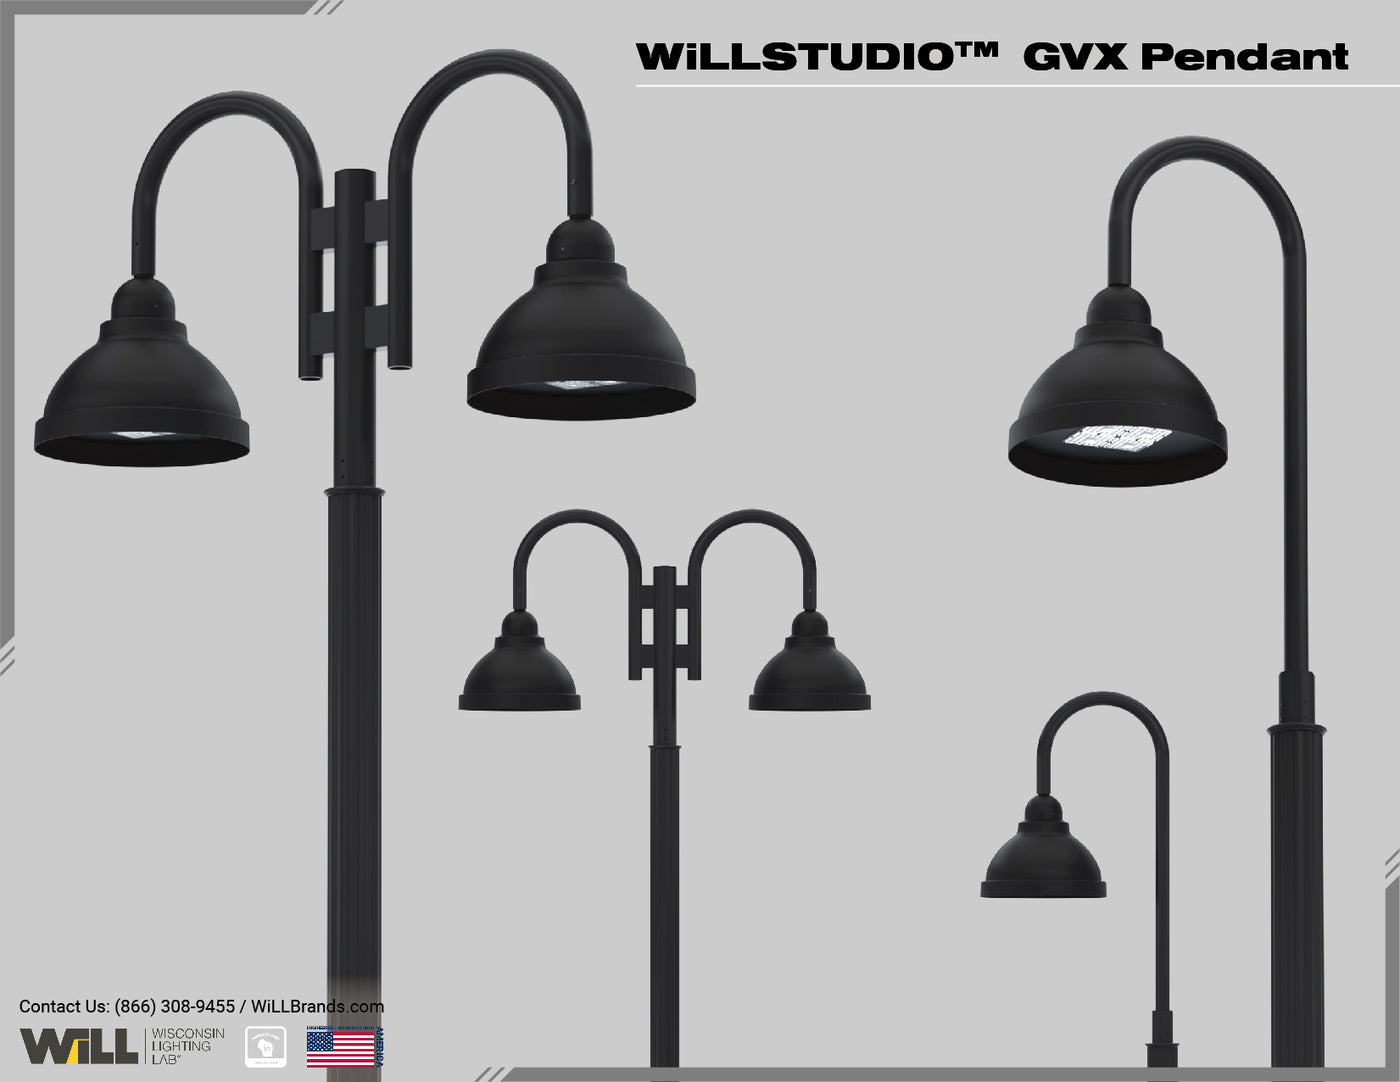 GVX Pendant with Custom Shepherds Hook Options